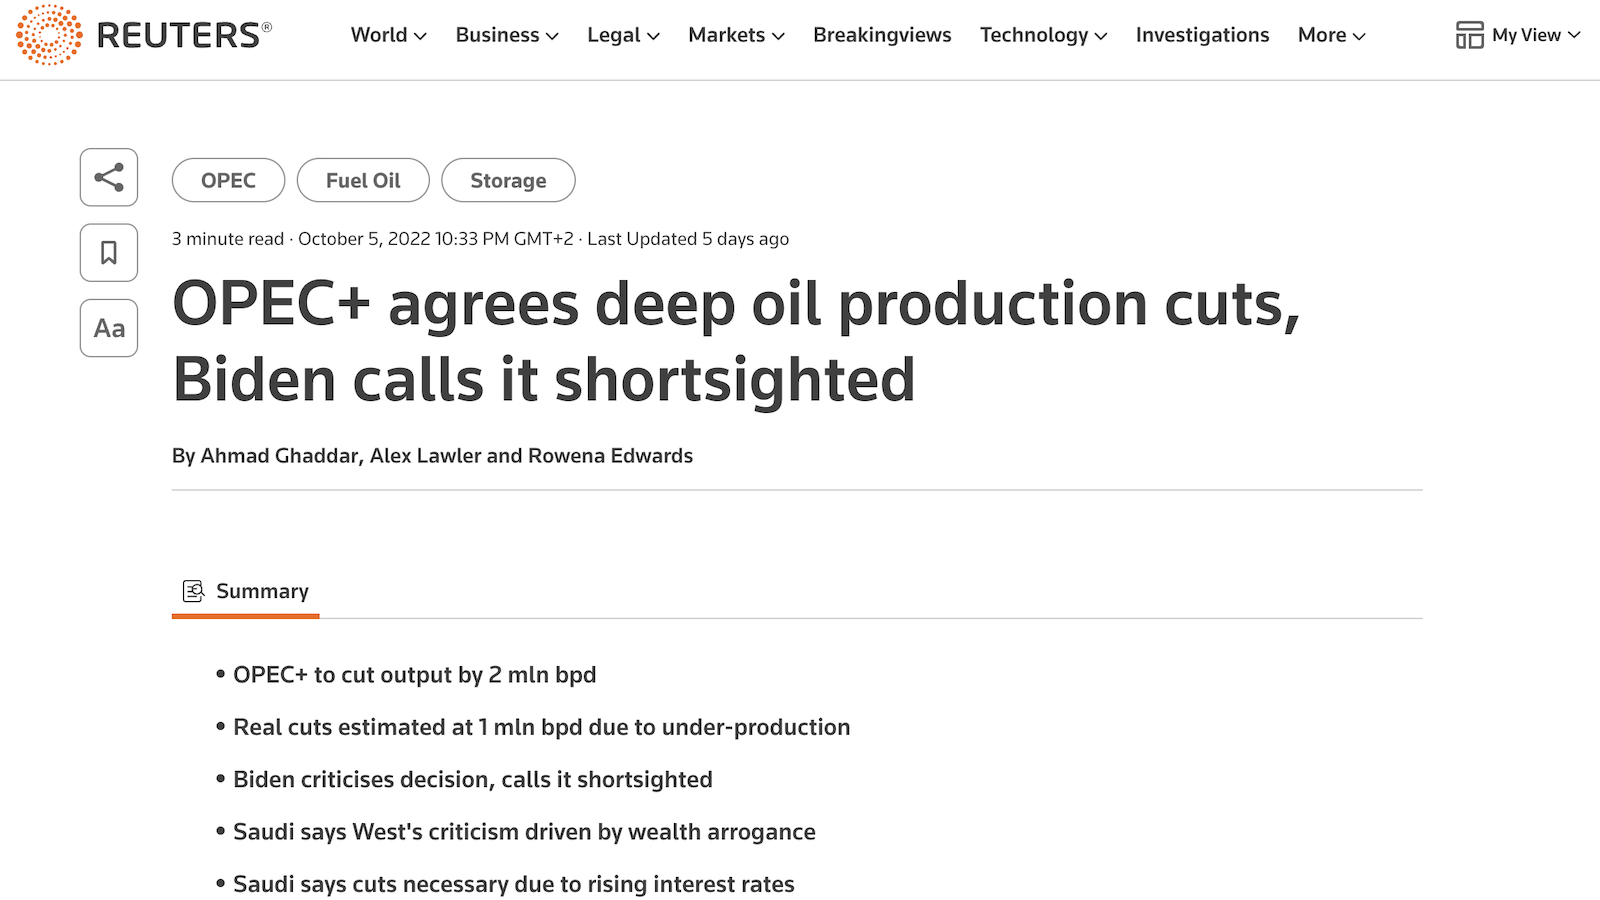 OPEC+ production cuts